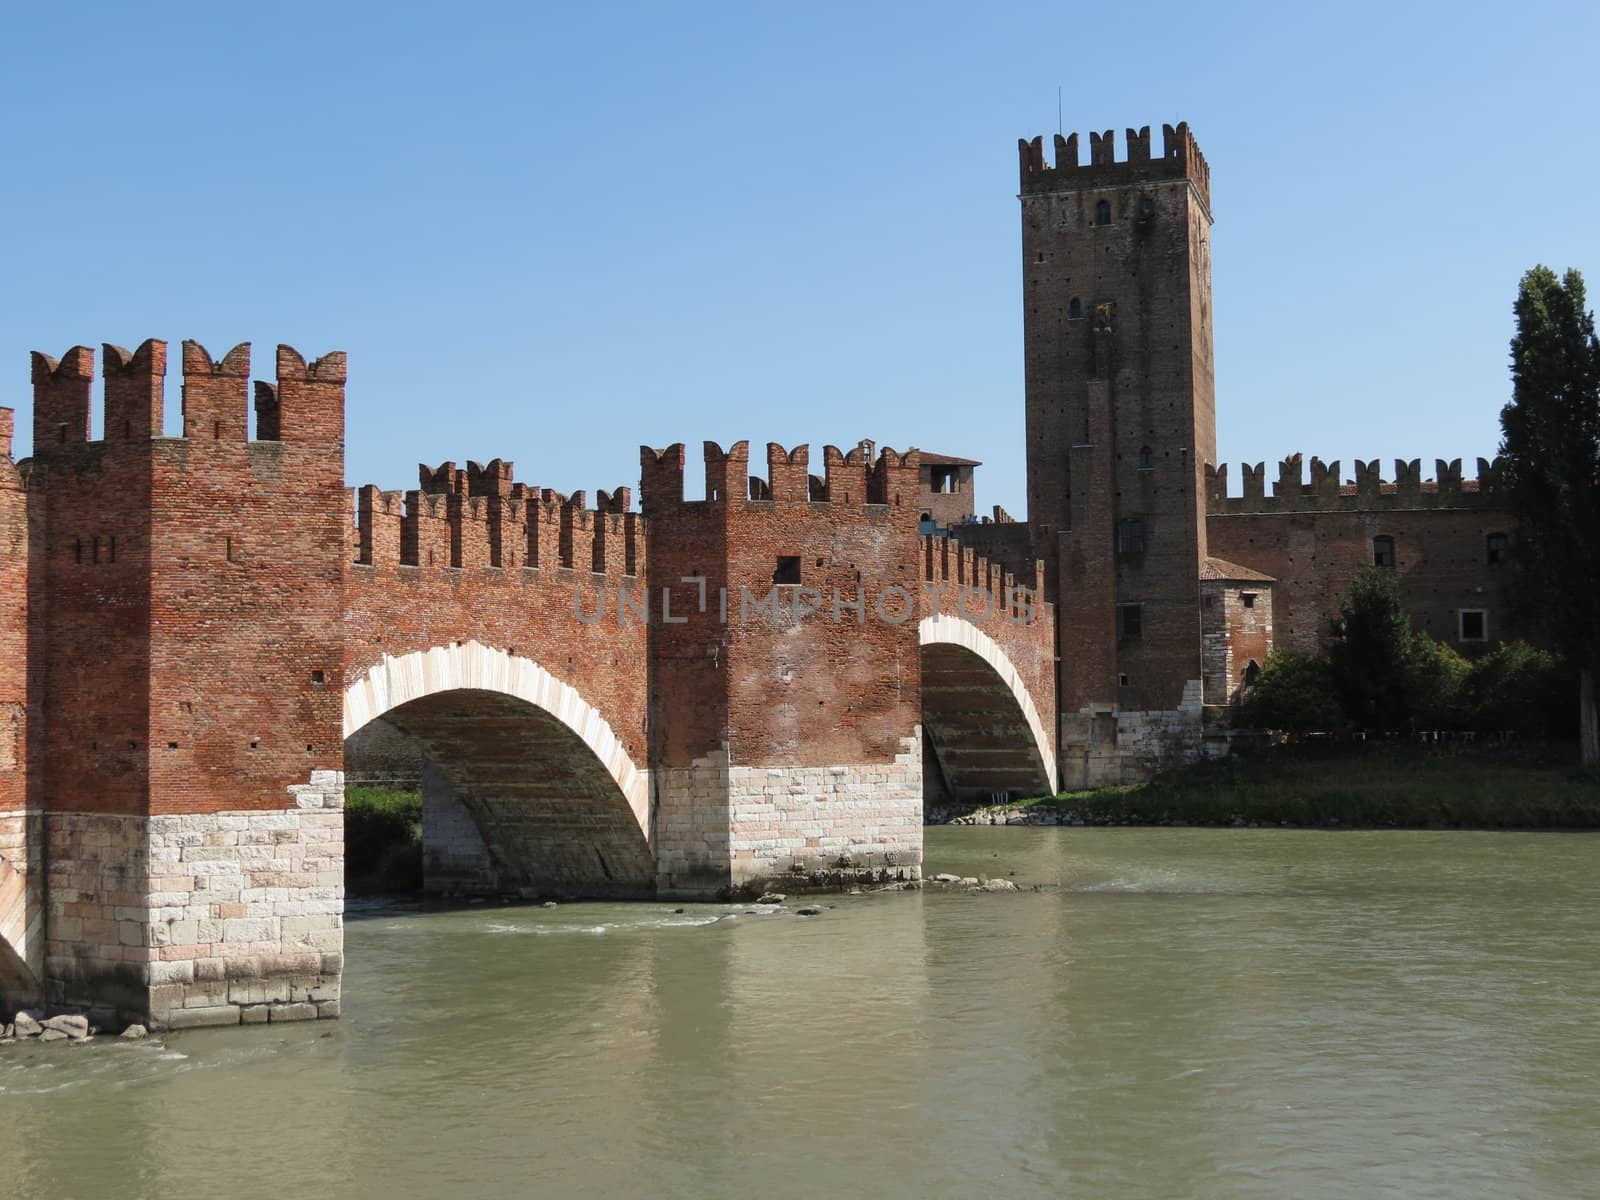 Verona - medieval castle by paolo77